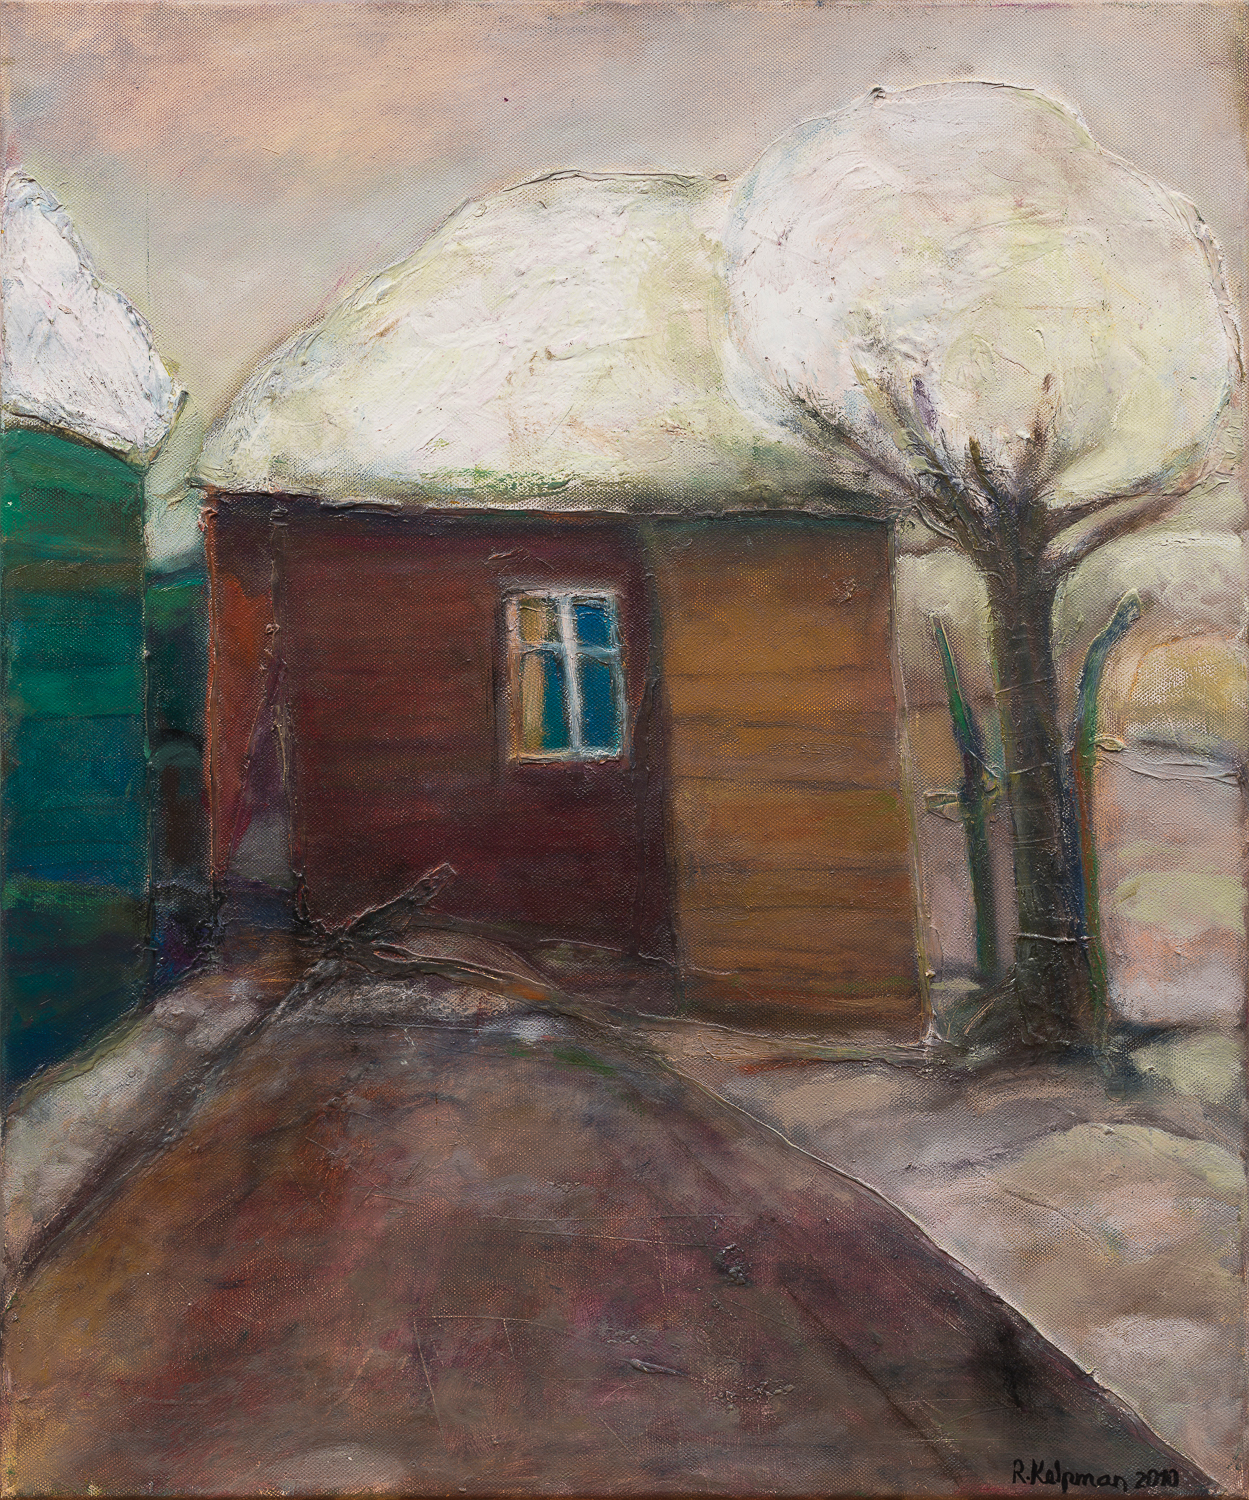 Rein Kelpman "Snowy Backyard"